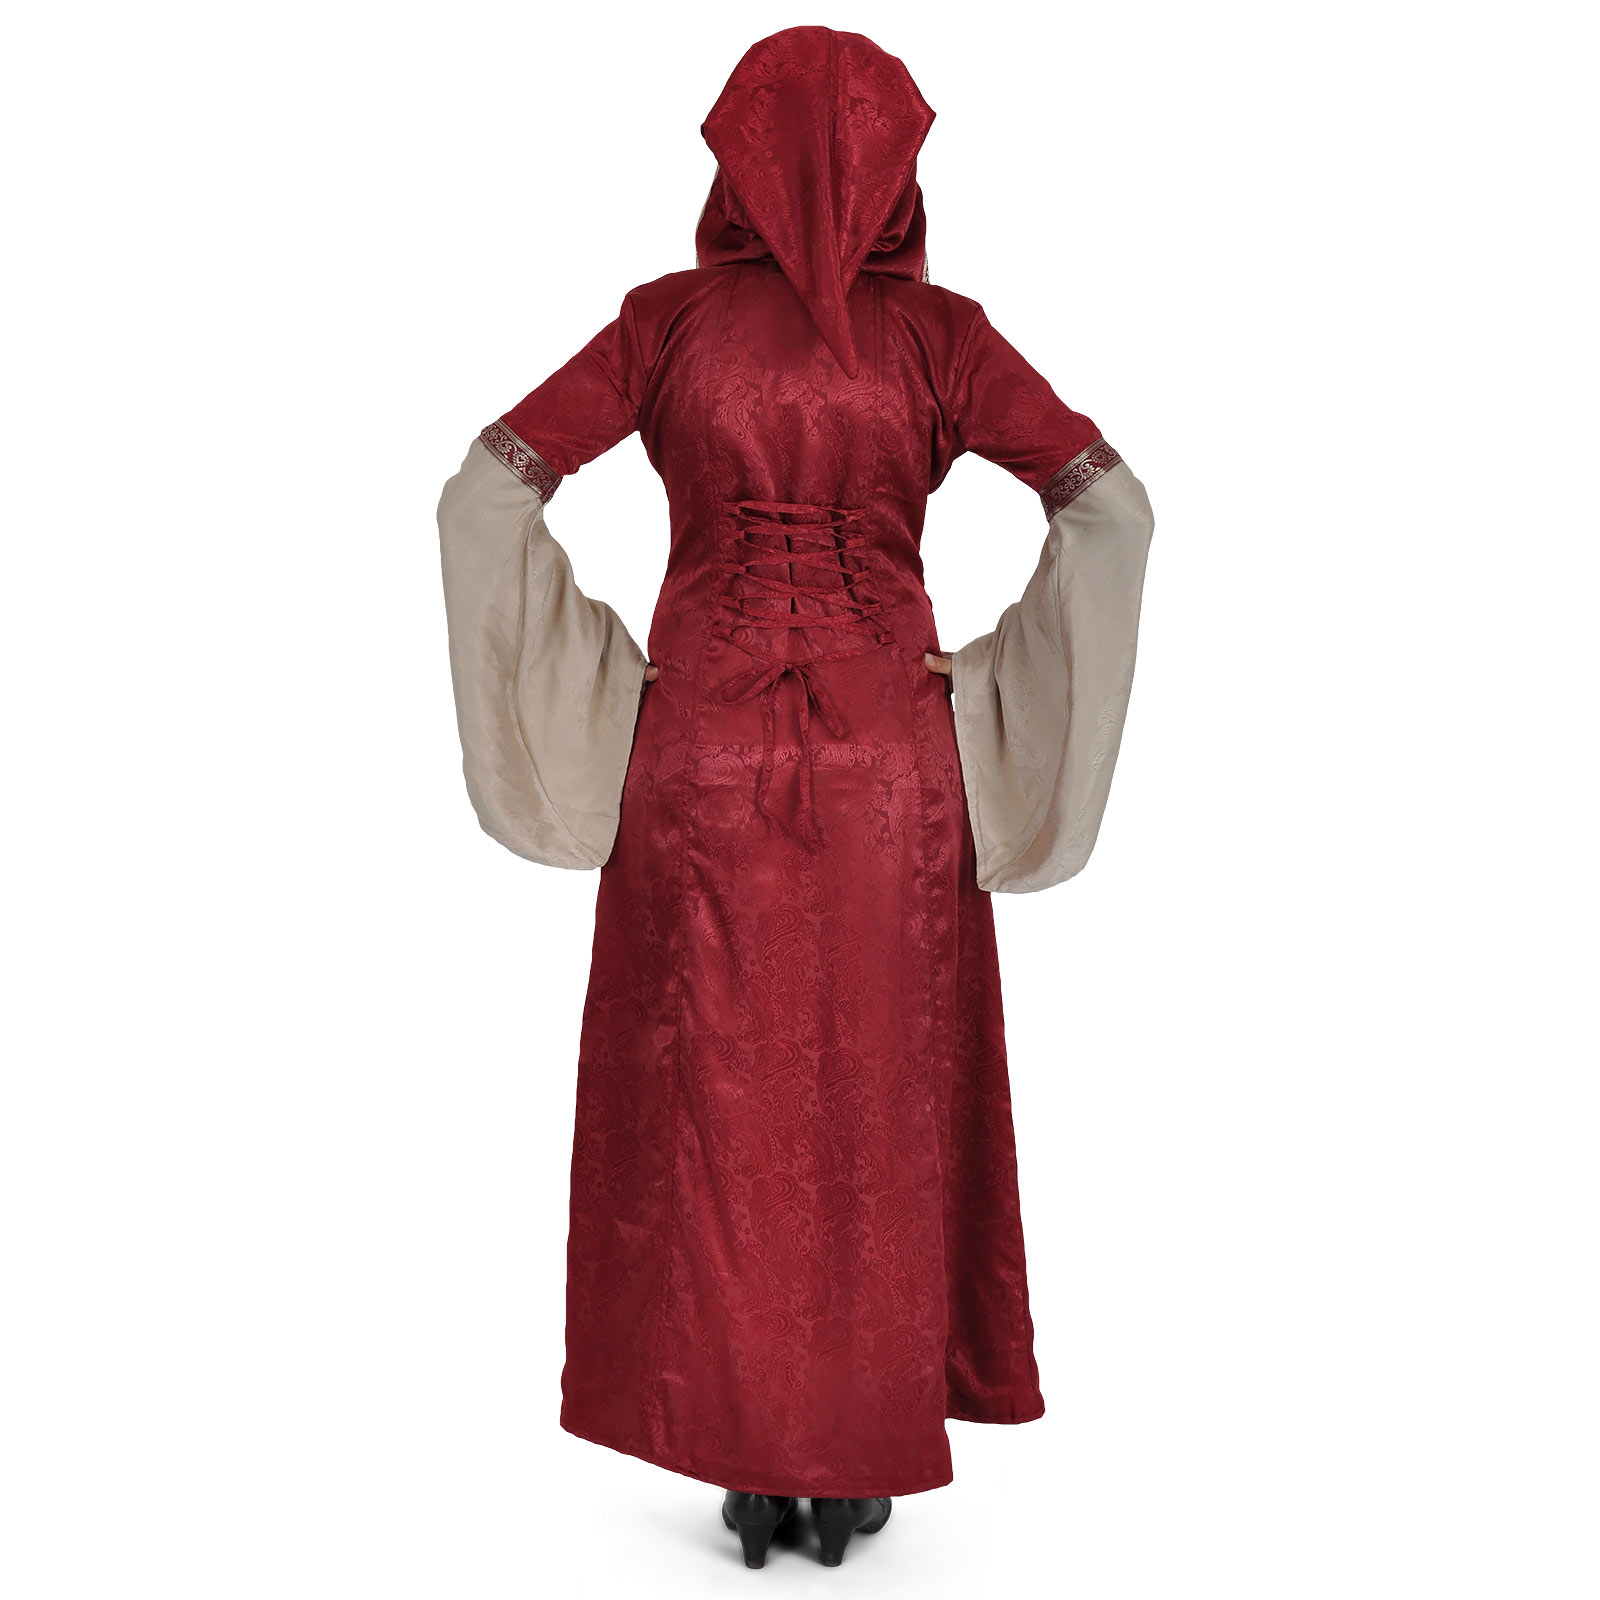 Luise - Middeleeuwse jurk